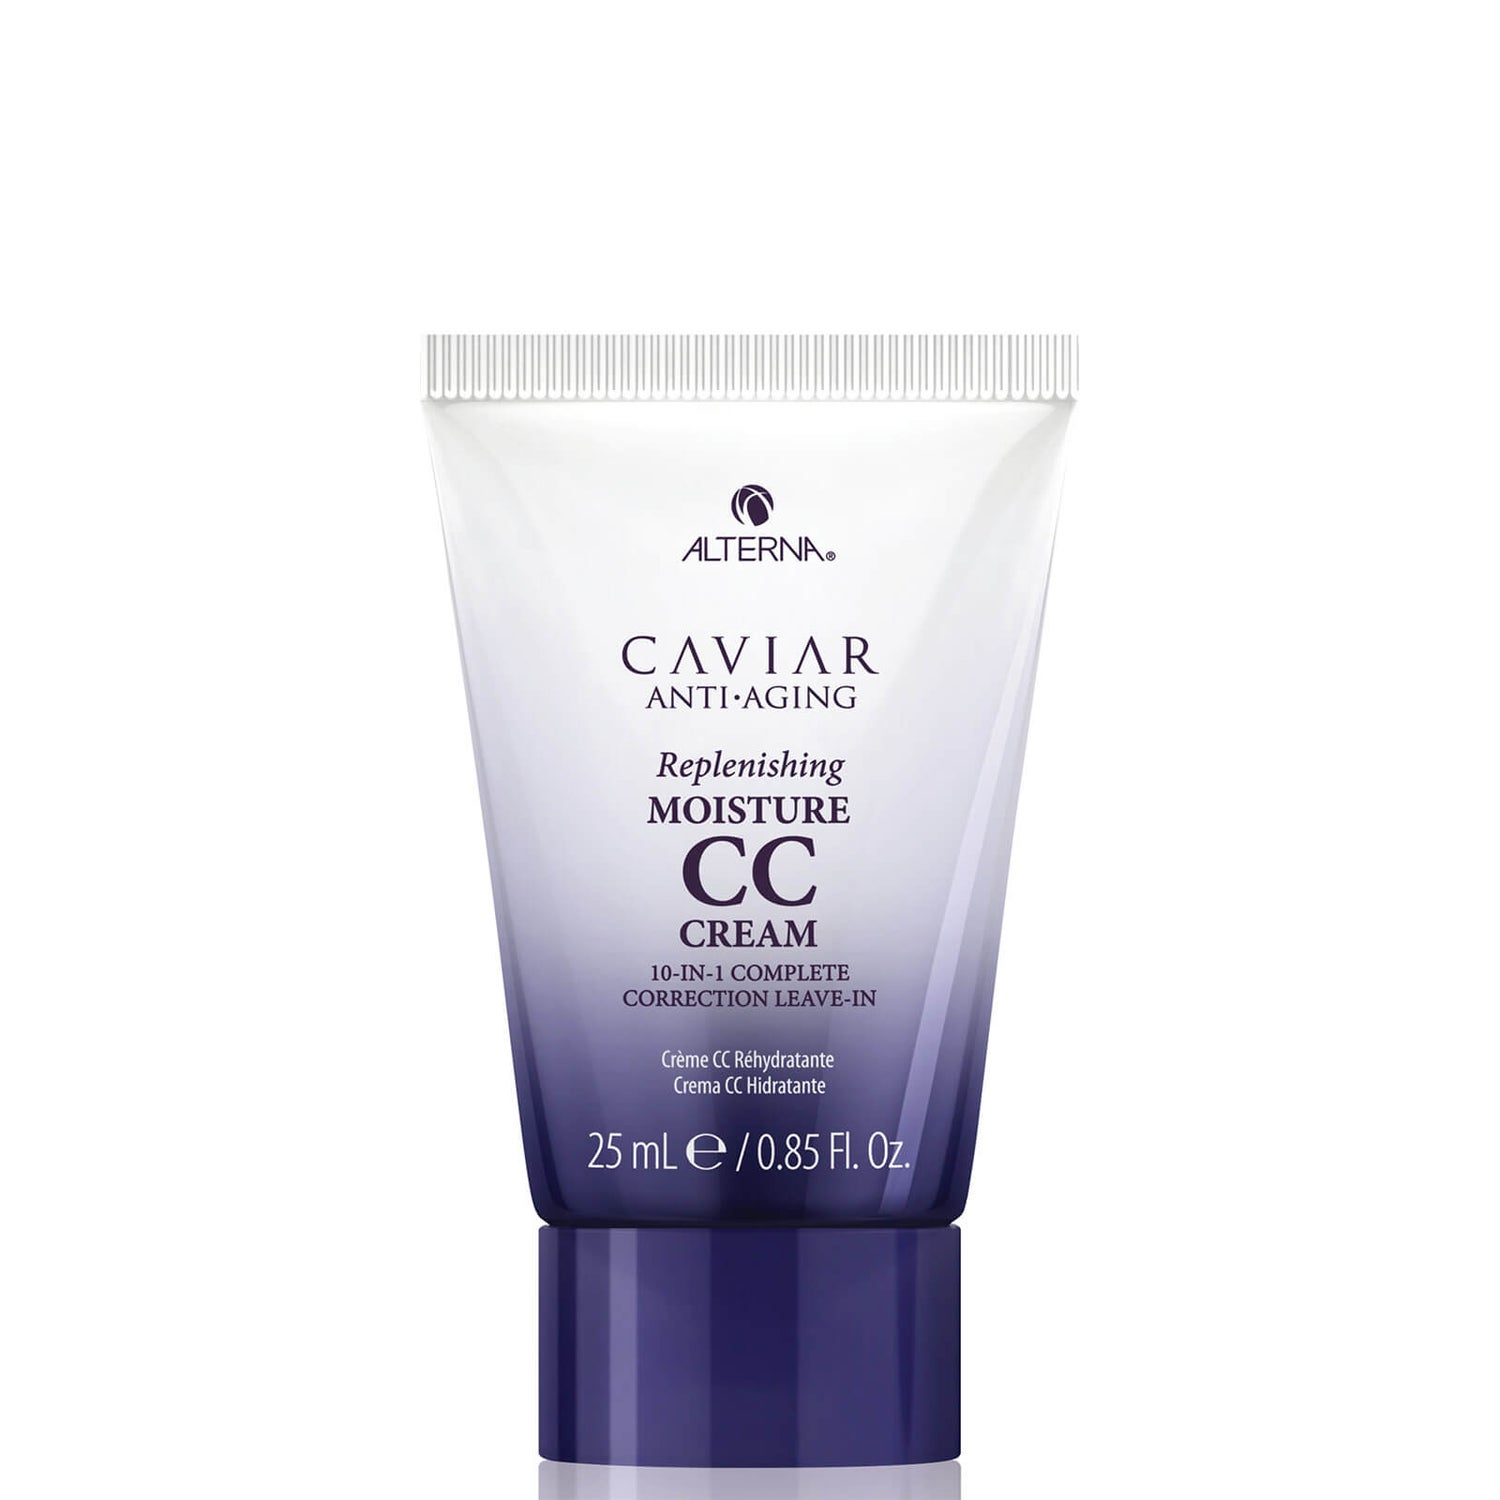 Alterna CAVIAR Anti-Aging Replenishing Moisture CC Cream Styling Cream 0.85 oz (Worth $7.00)